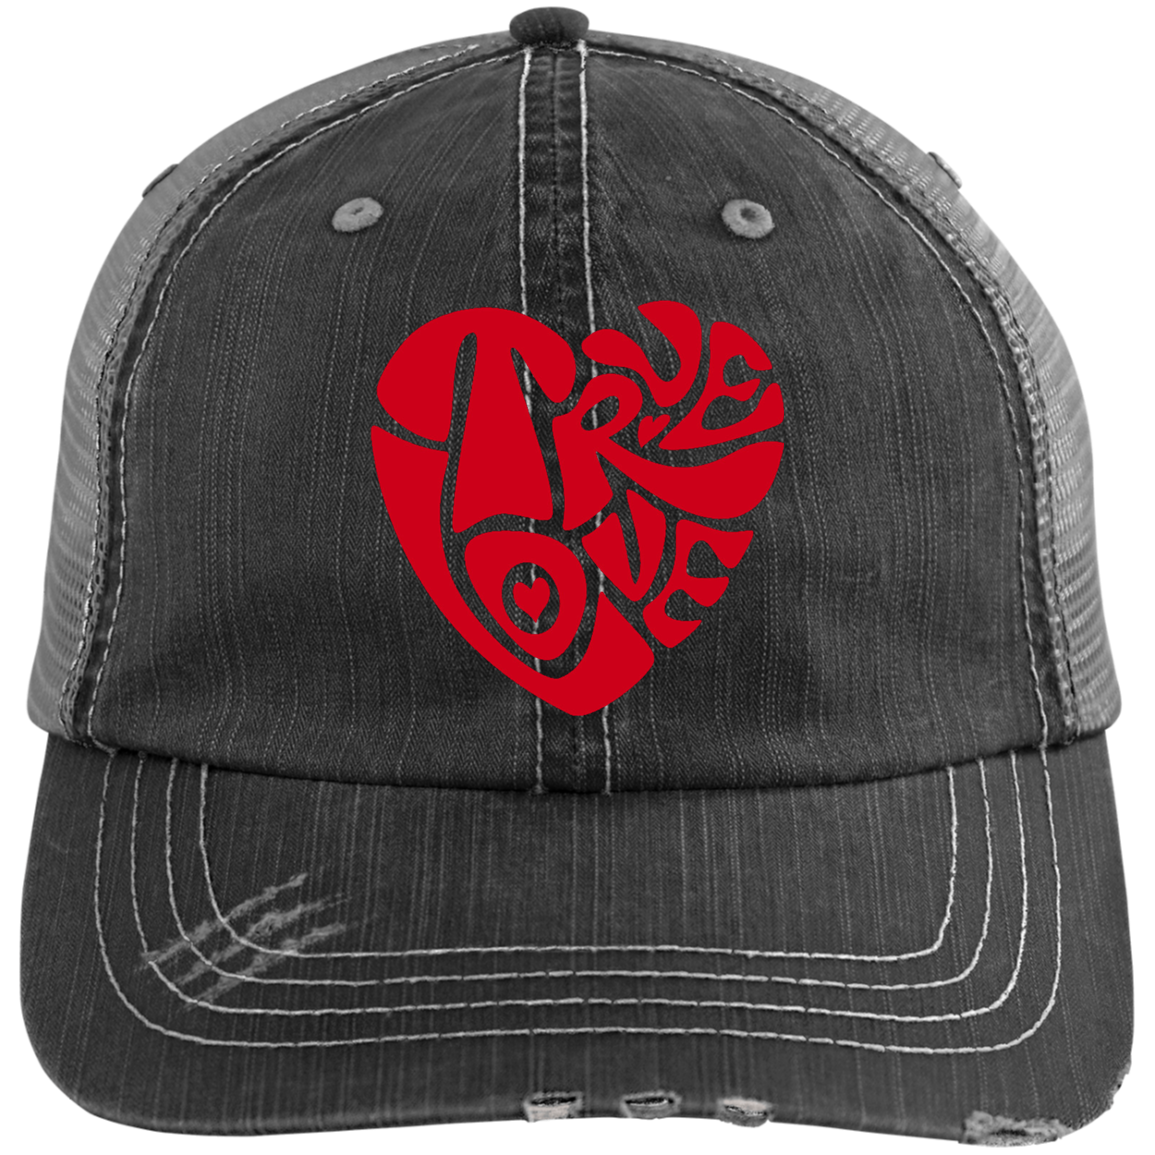 TRUE LOVE by Wisam embroidered Trucker Cap